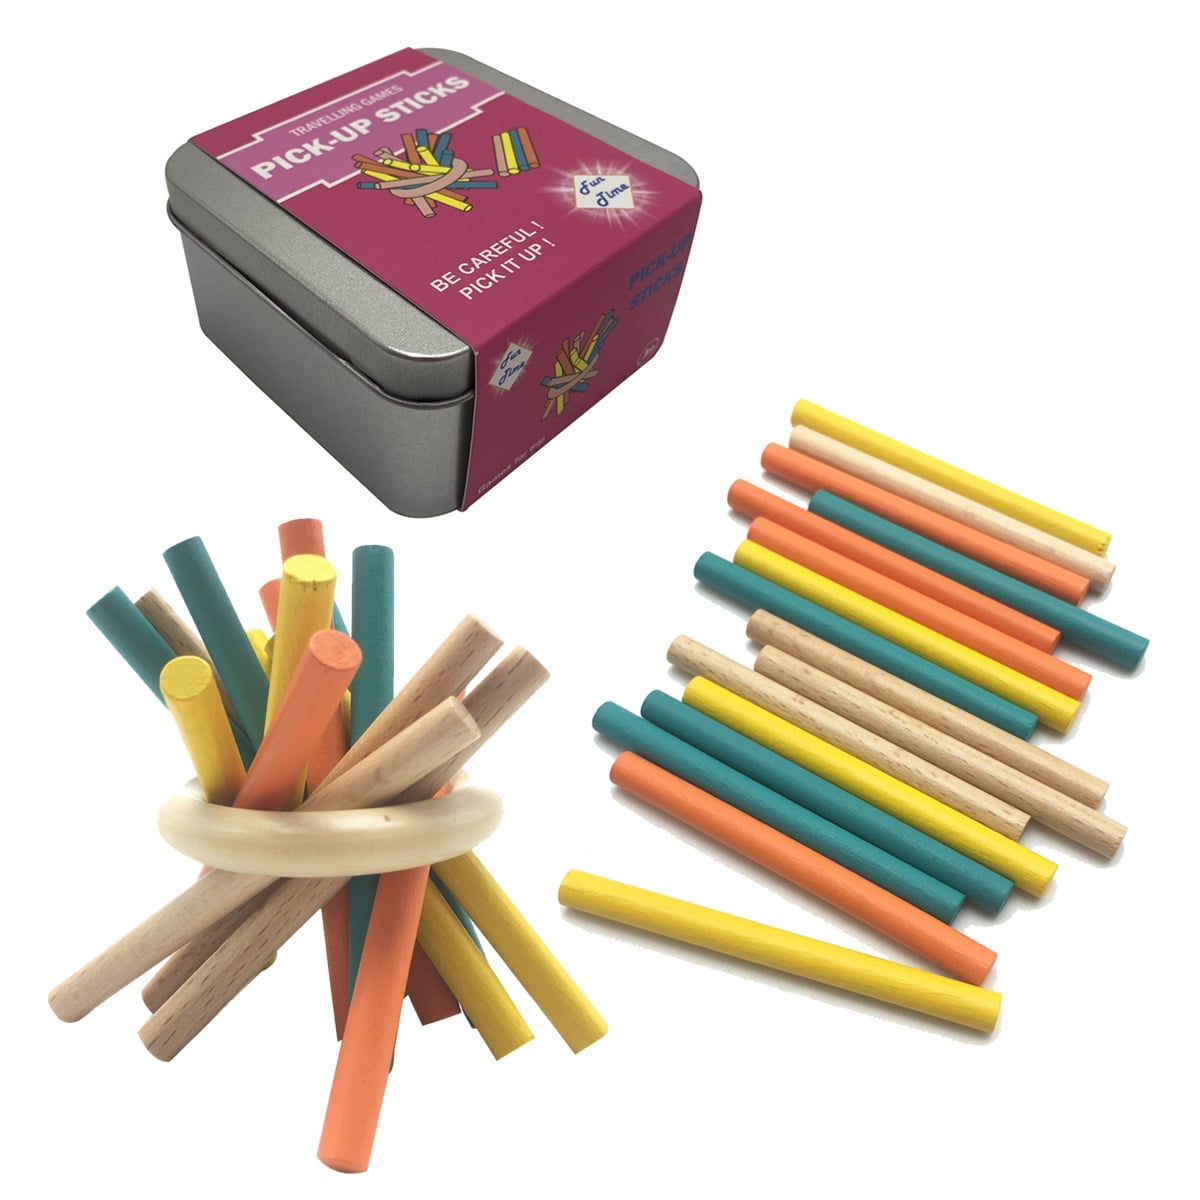 Hotsale 1Set Wood Pick Up Sticks w/ Wooden Box Pick-up Educational Toys Gift S 